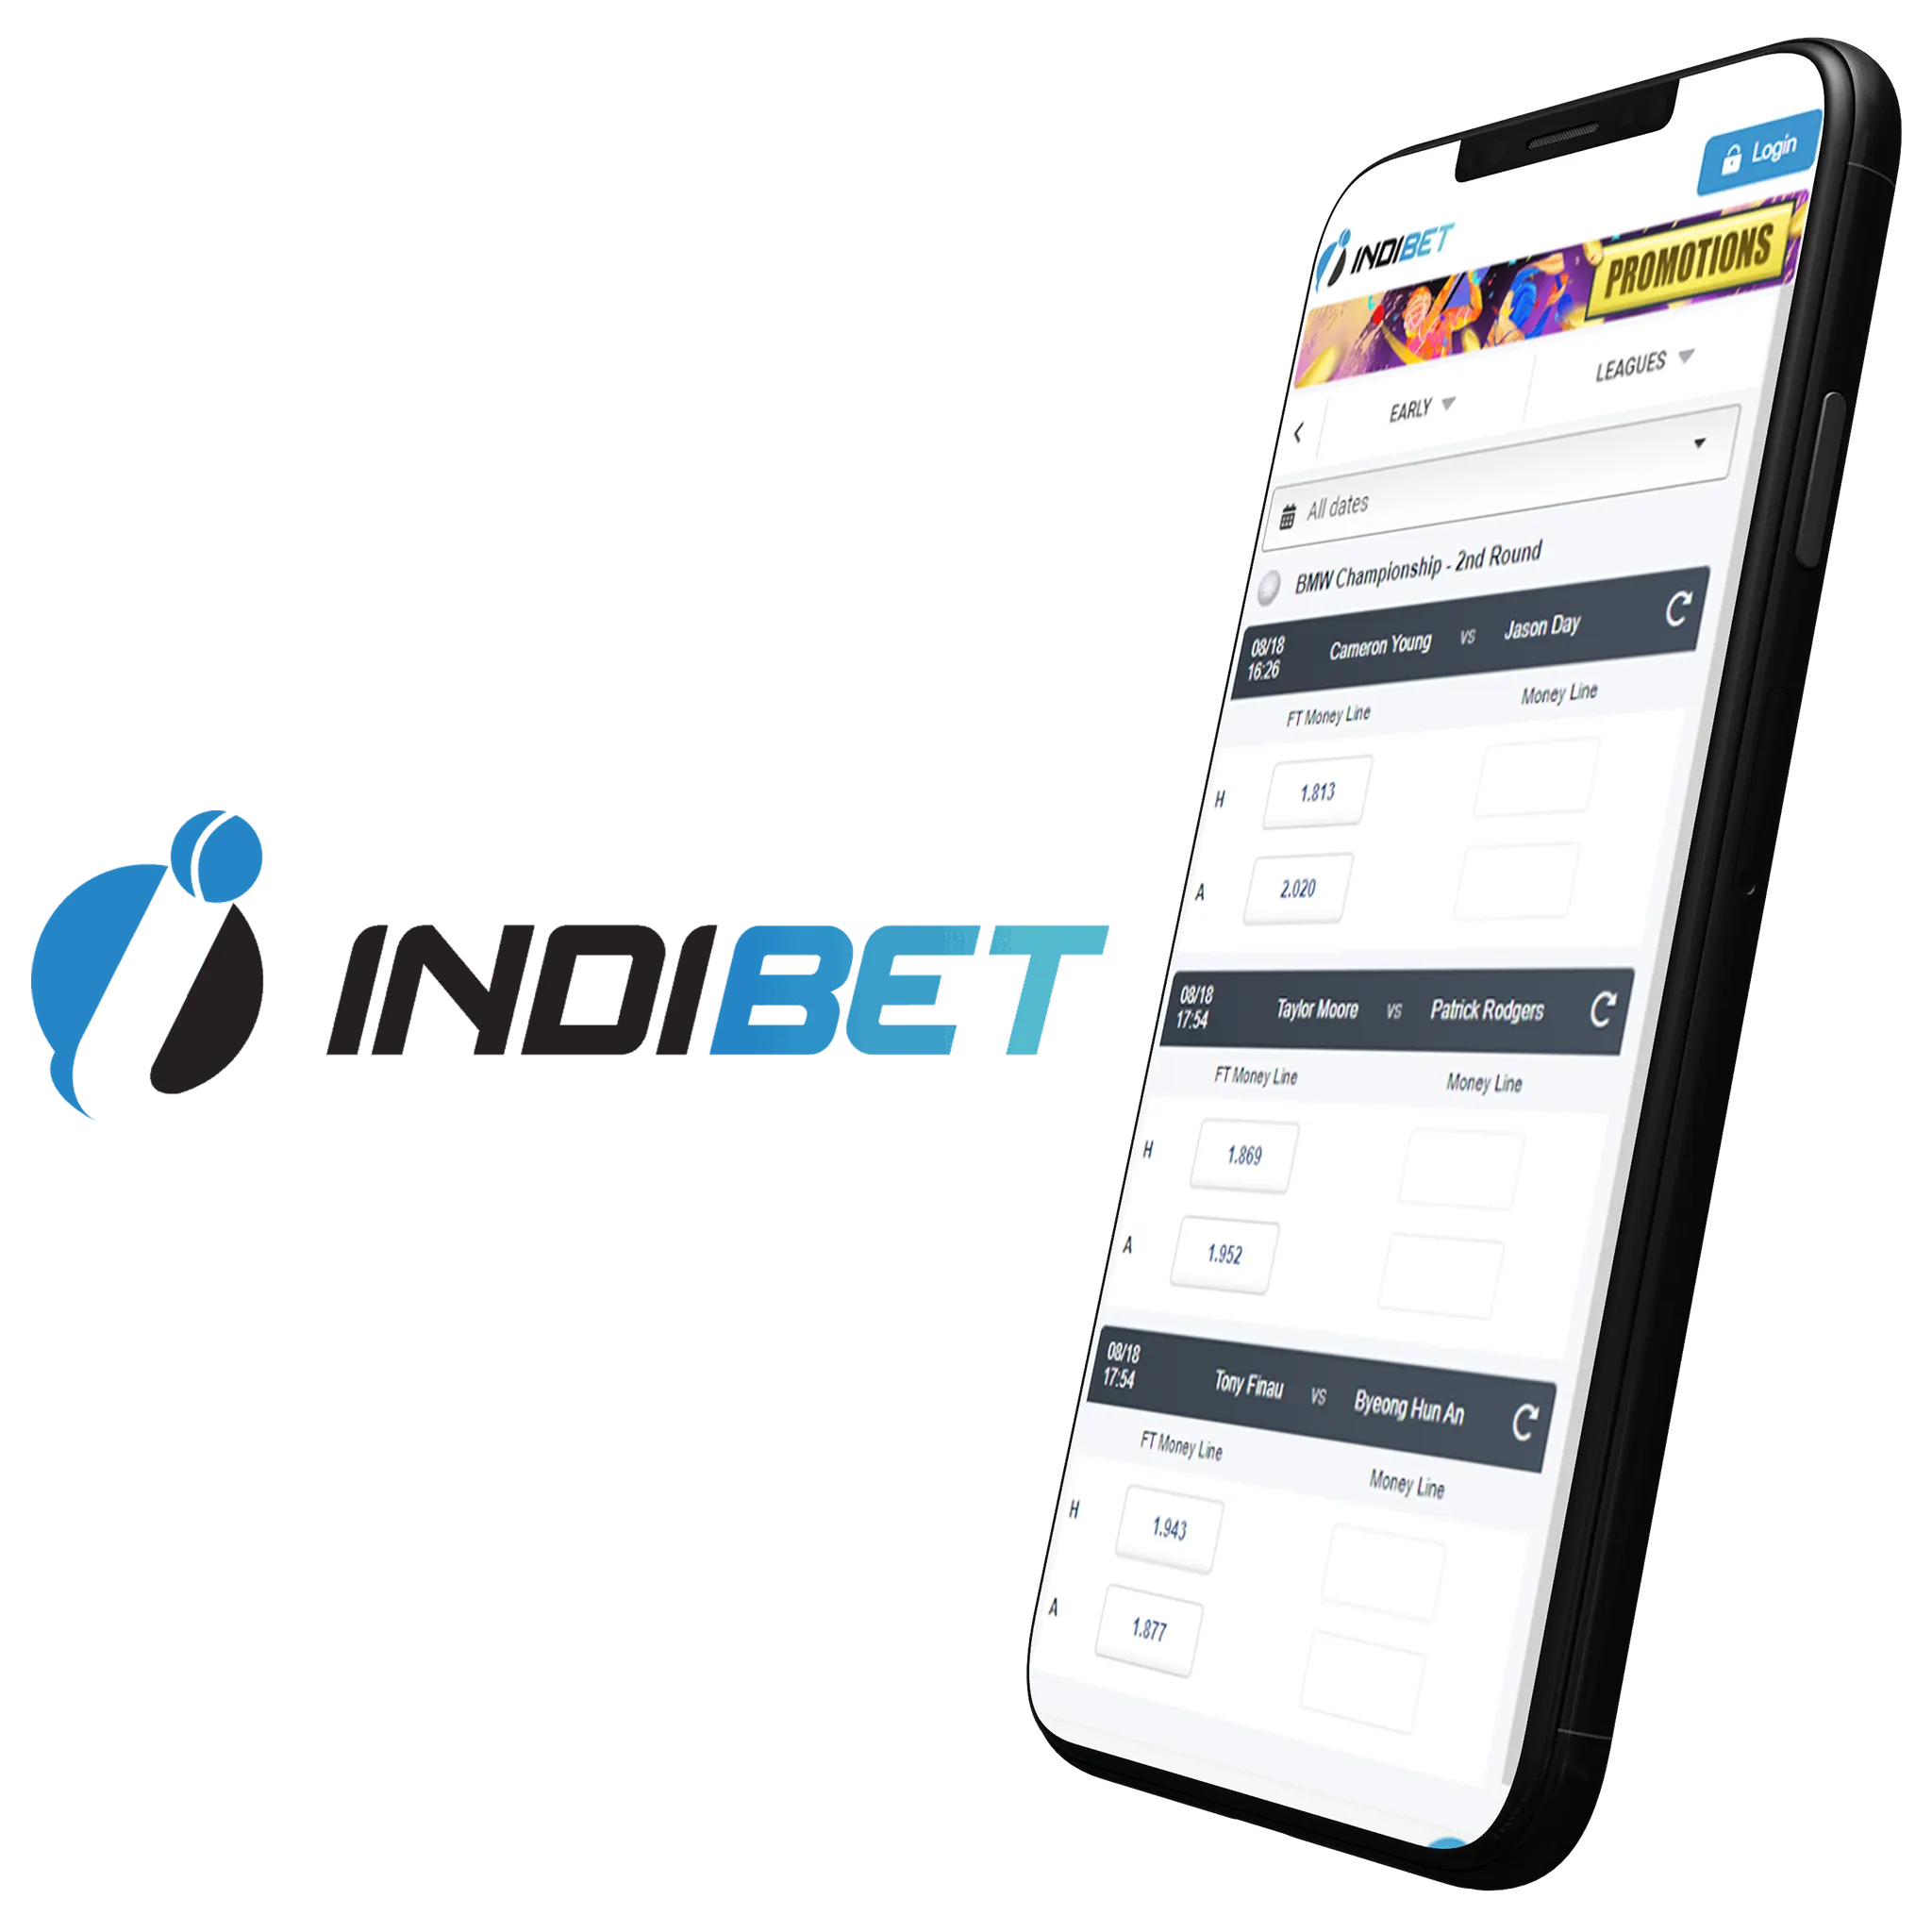 Best golf betting bonuses on Indibet app.